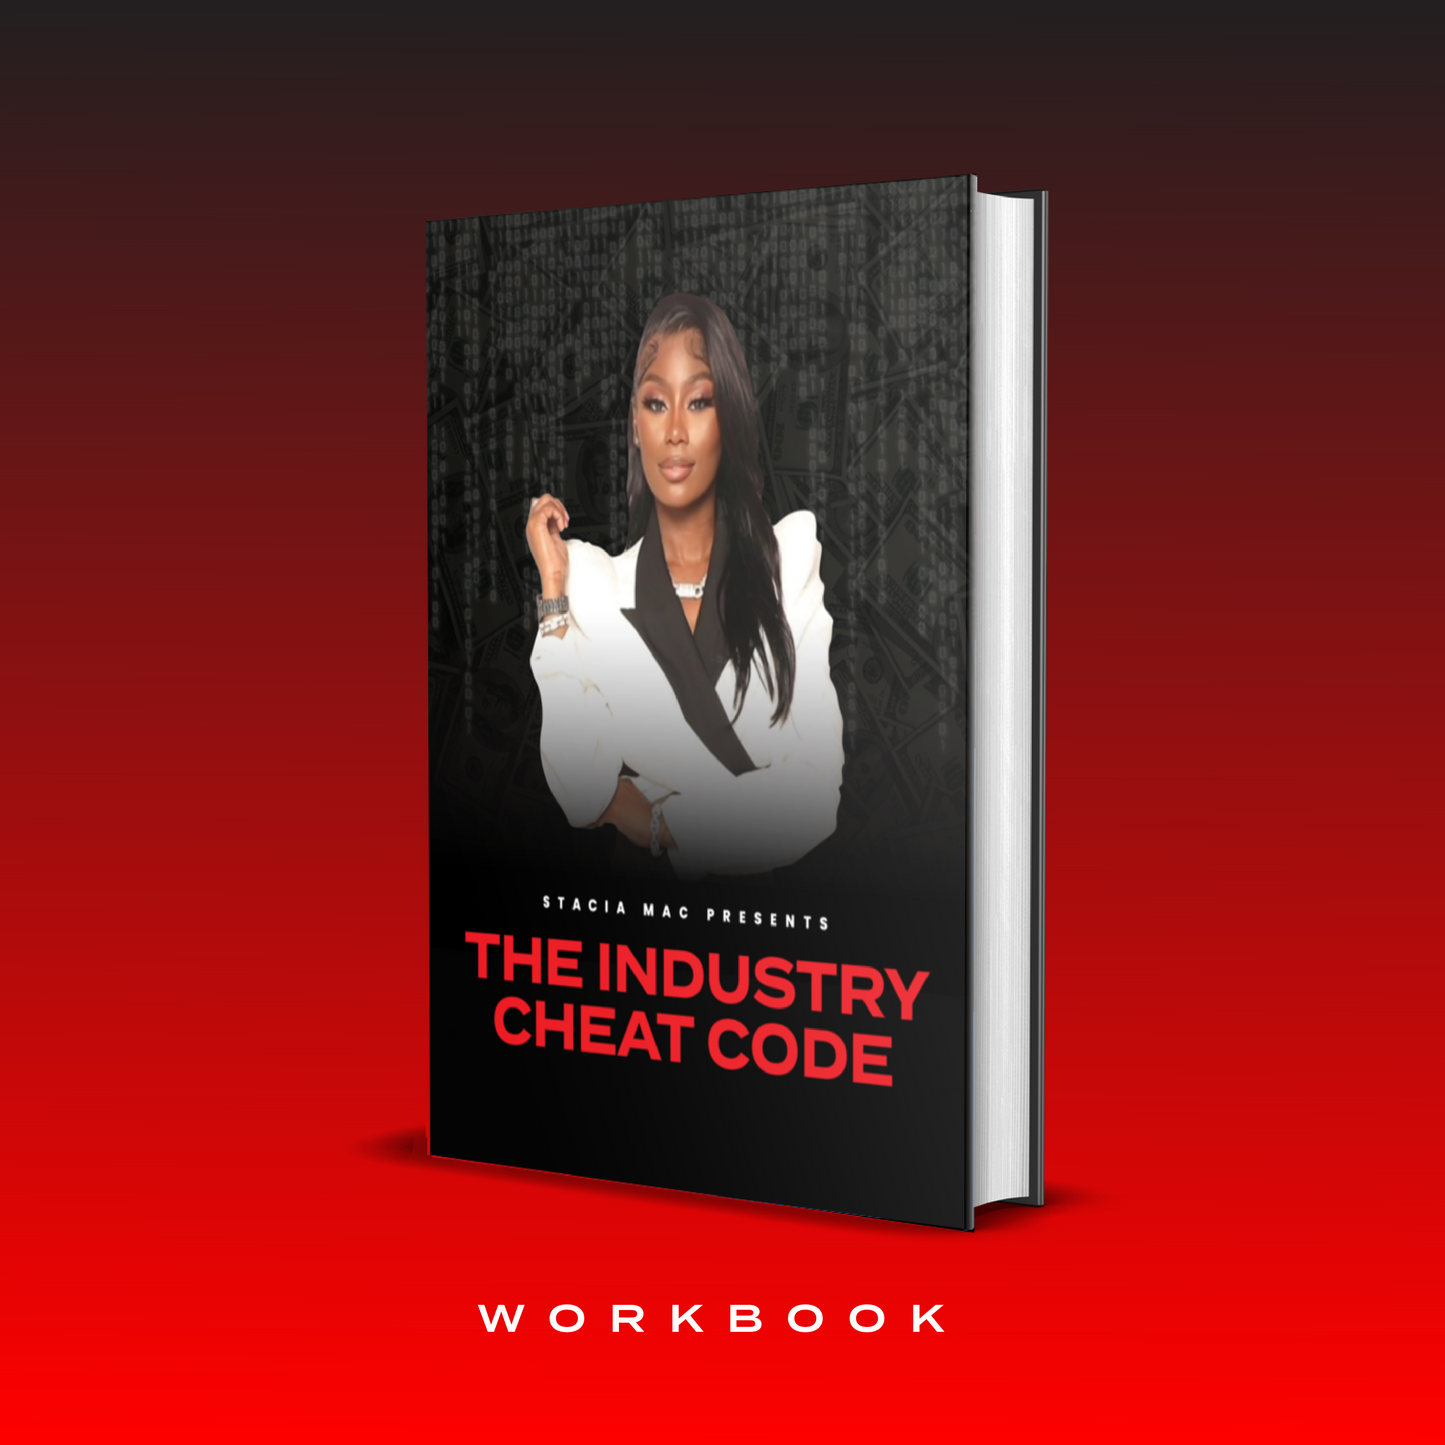 The Industry Cheat Code - Workbook